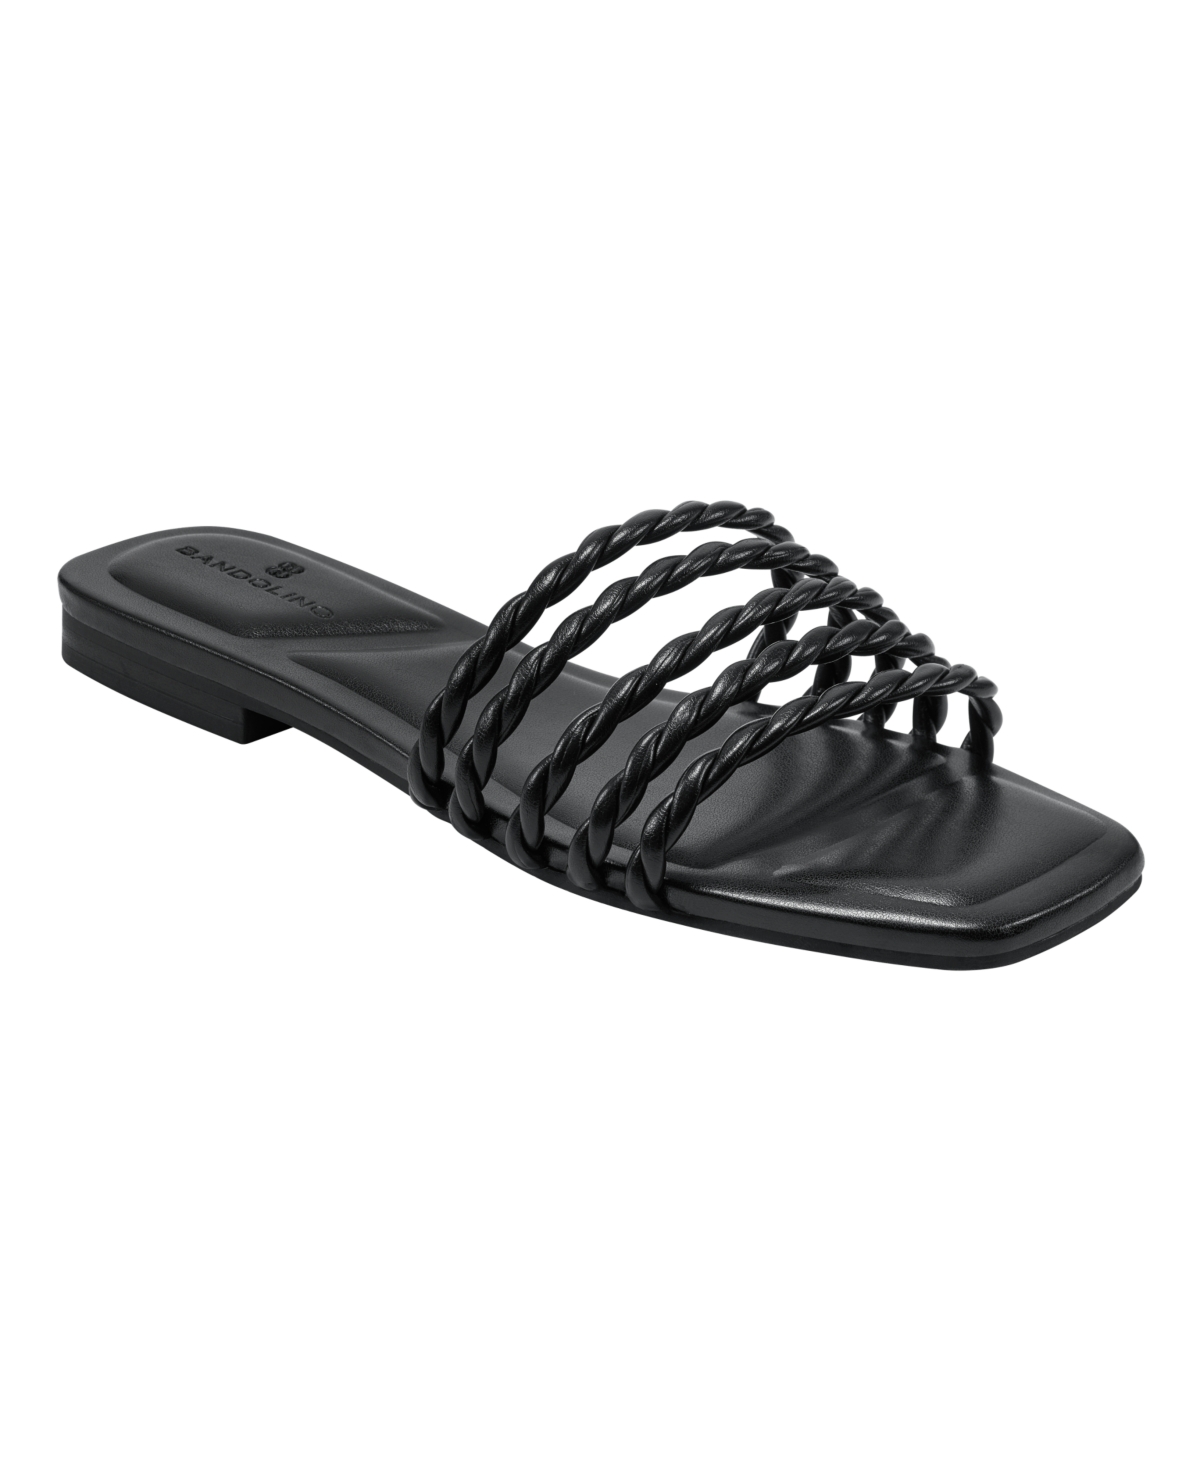 Bandolino Women's Soyou Open Toe Flat Slip On Sandals Women's Shoes